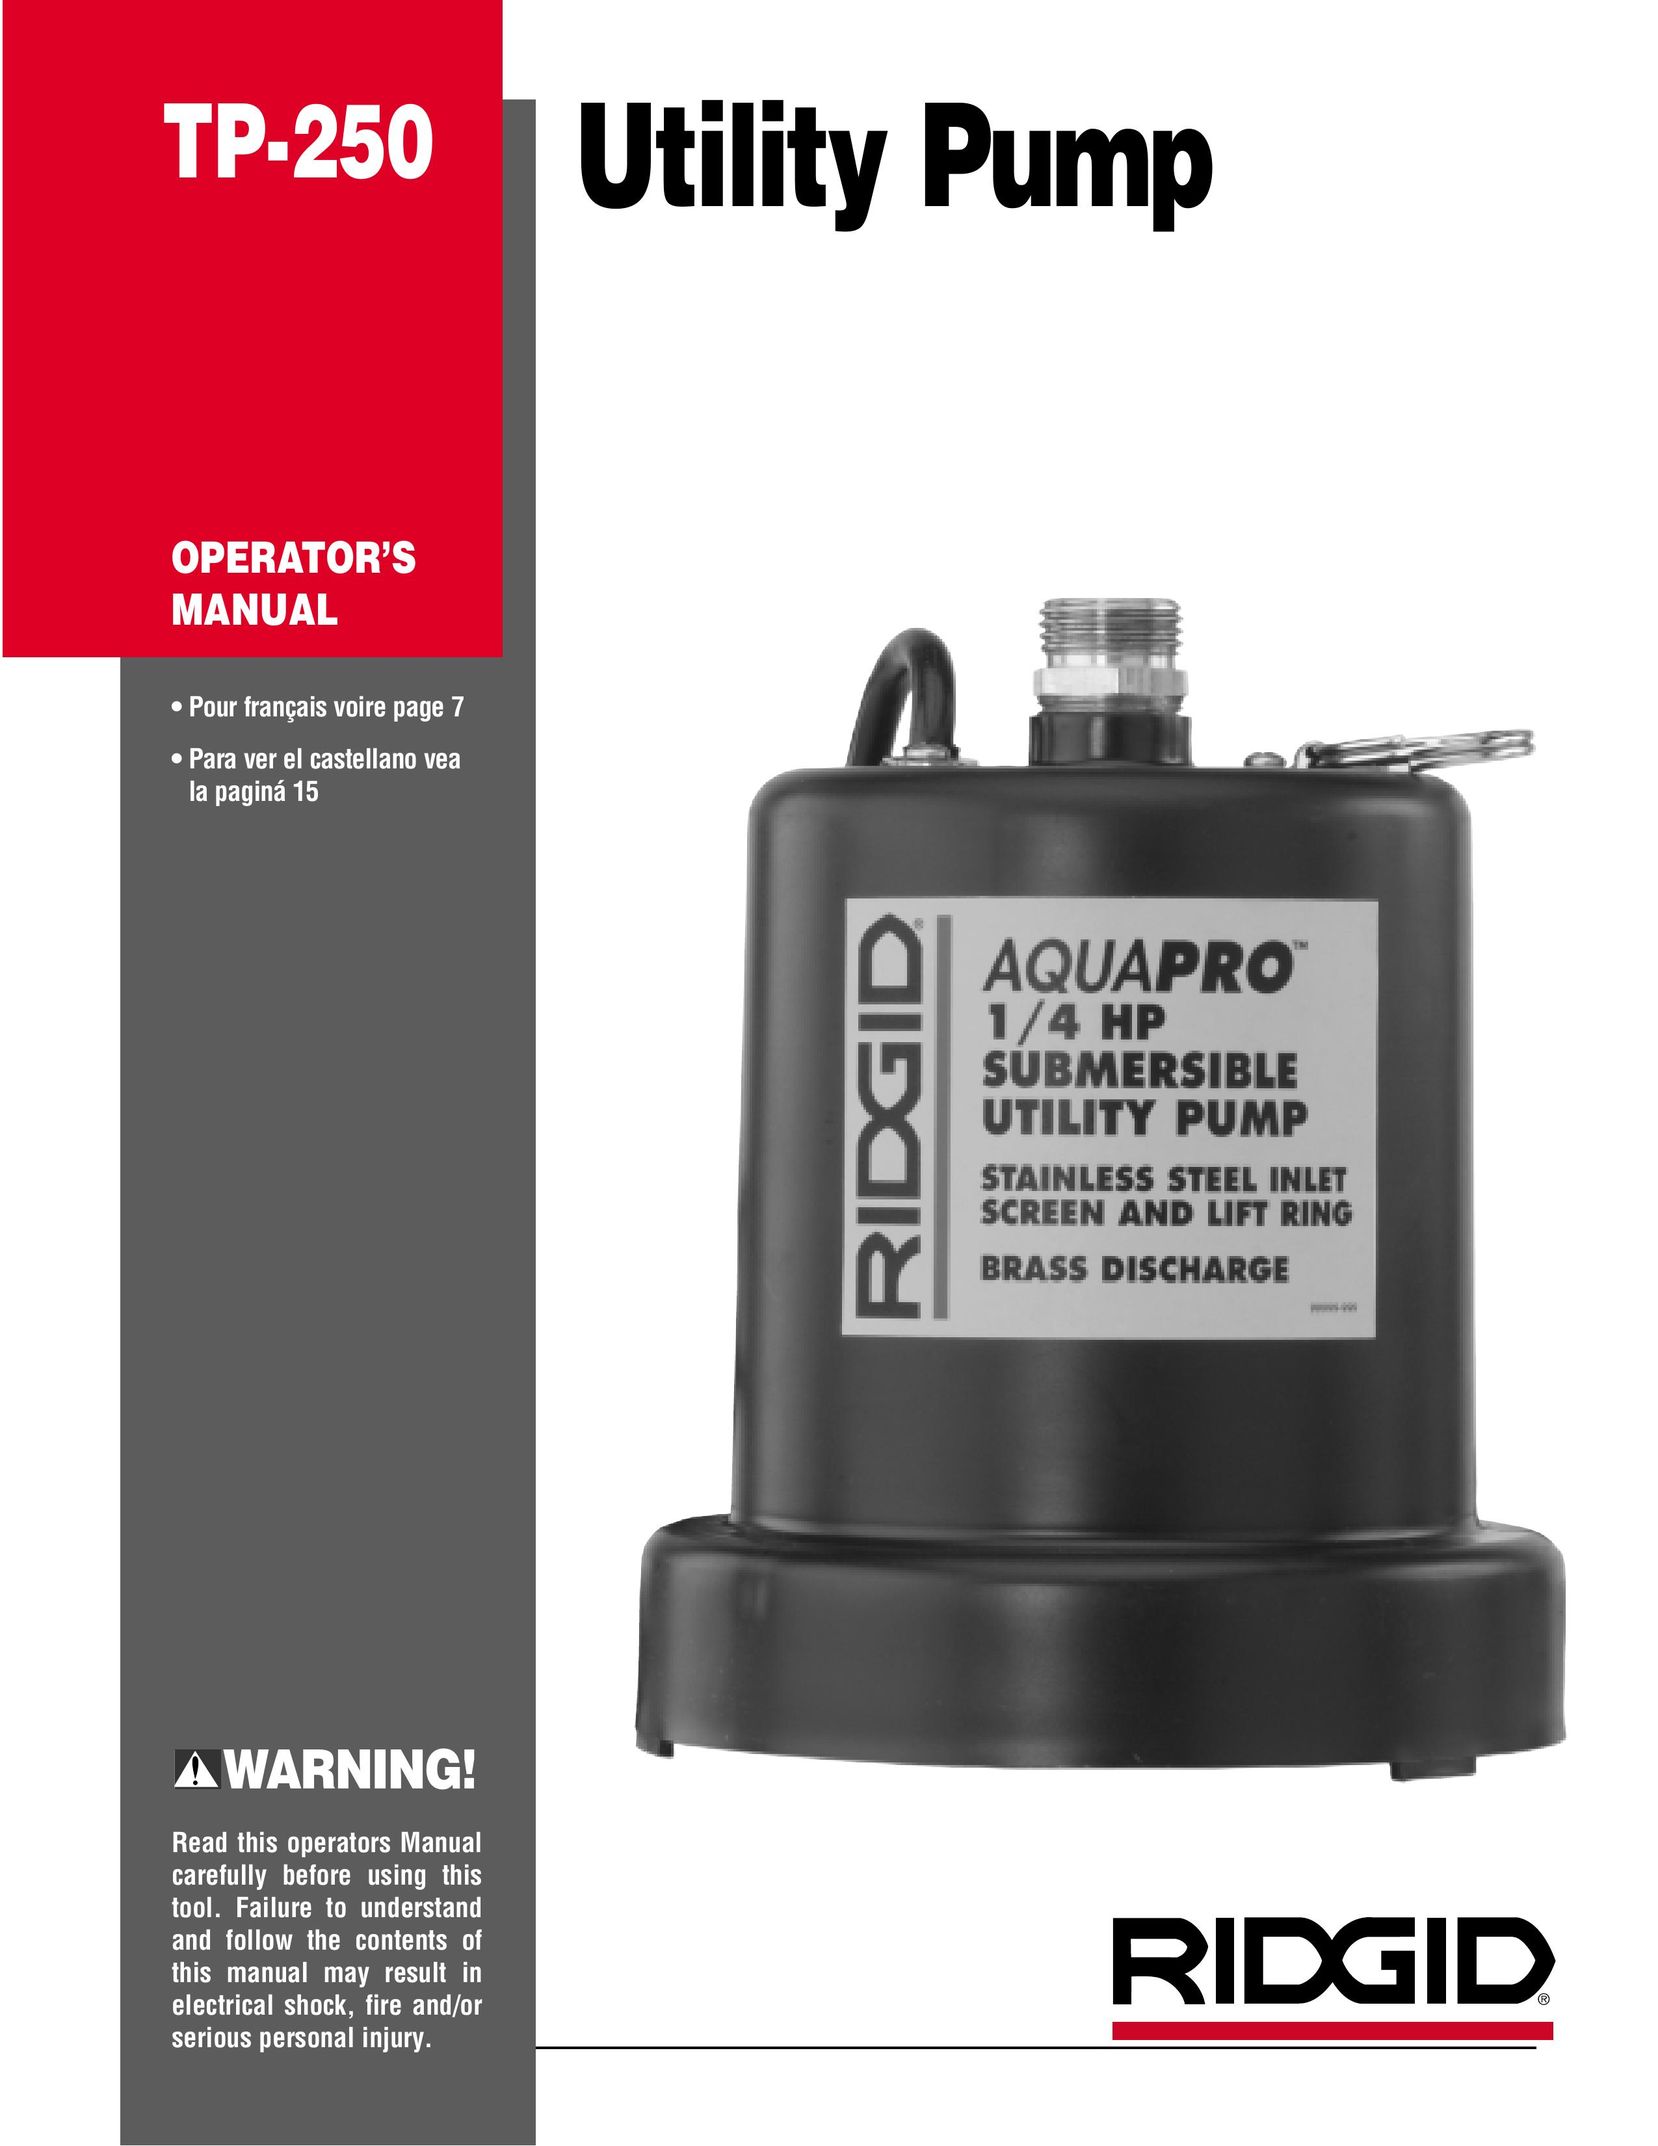 RIDGID TP-250 Water Pump User Manual